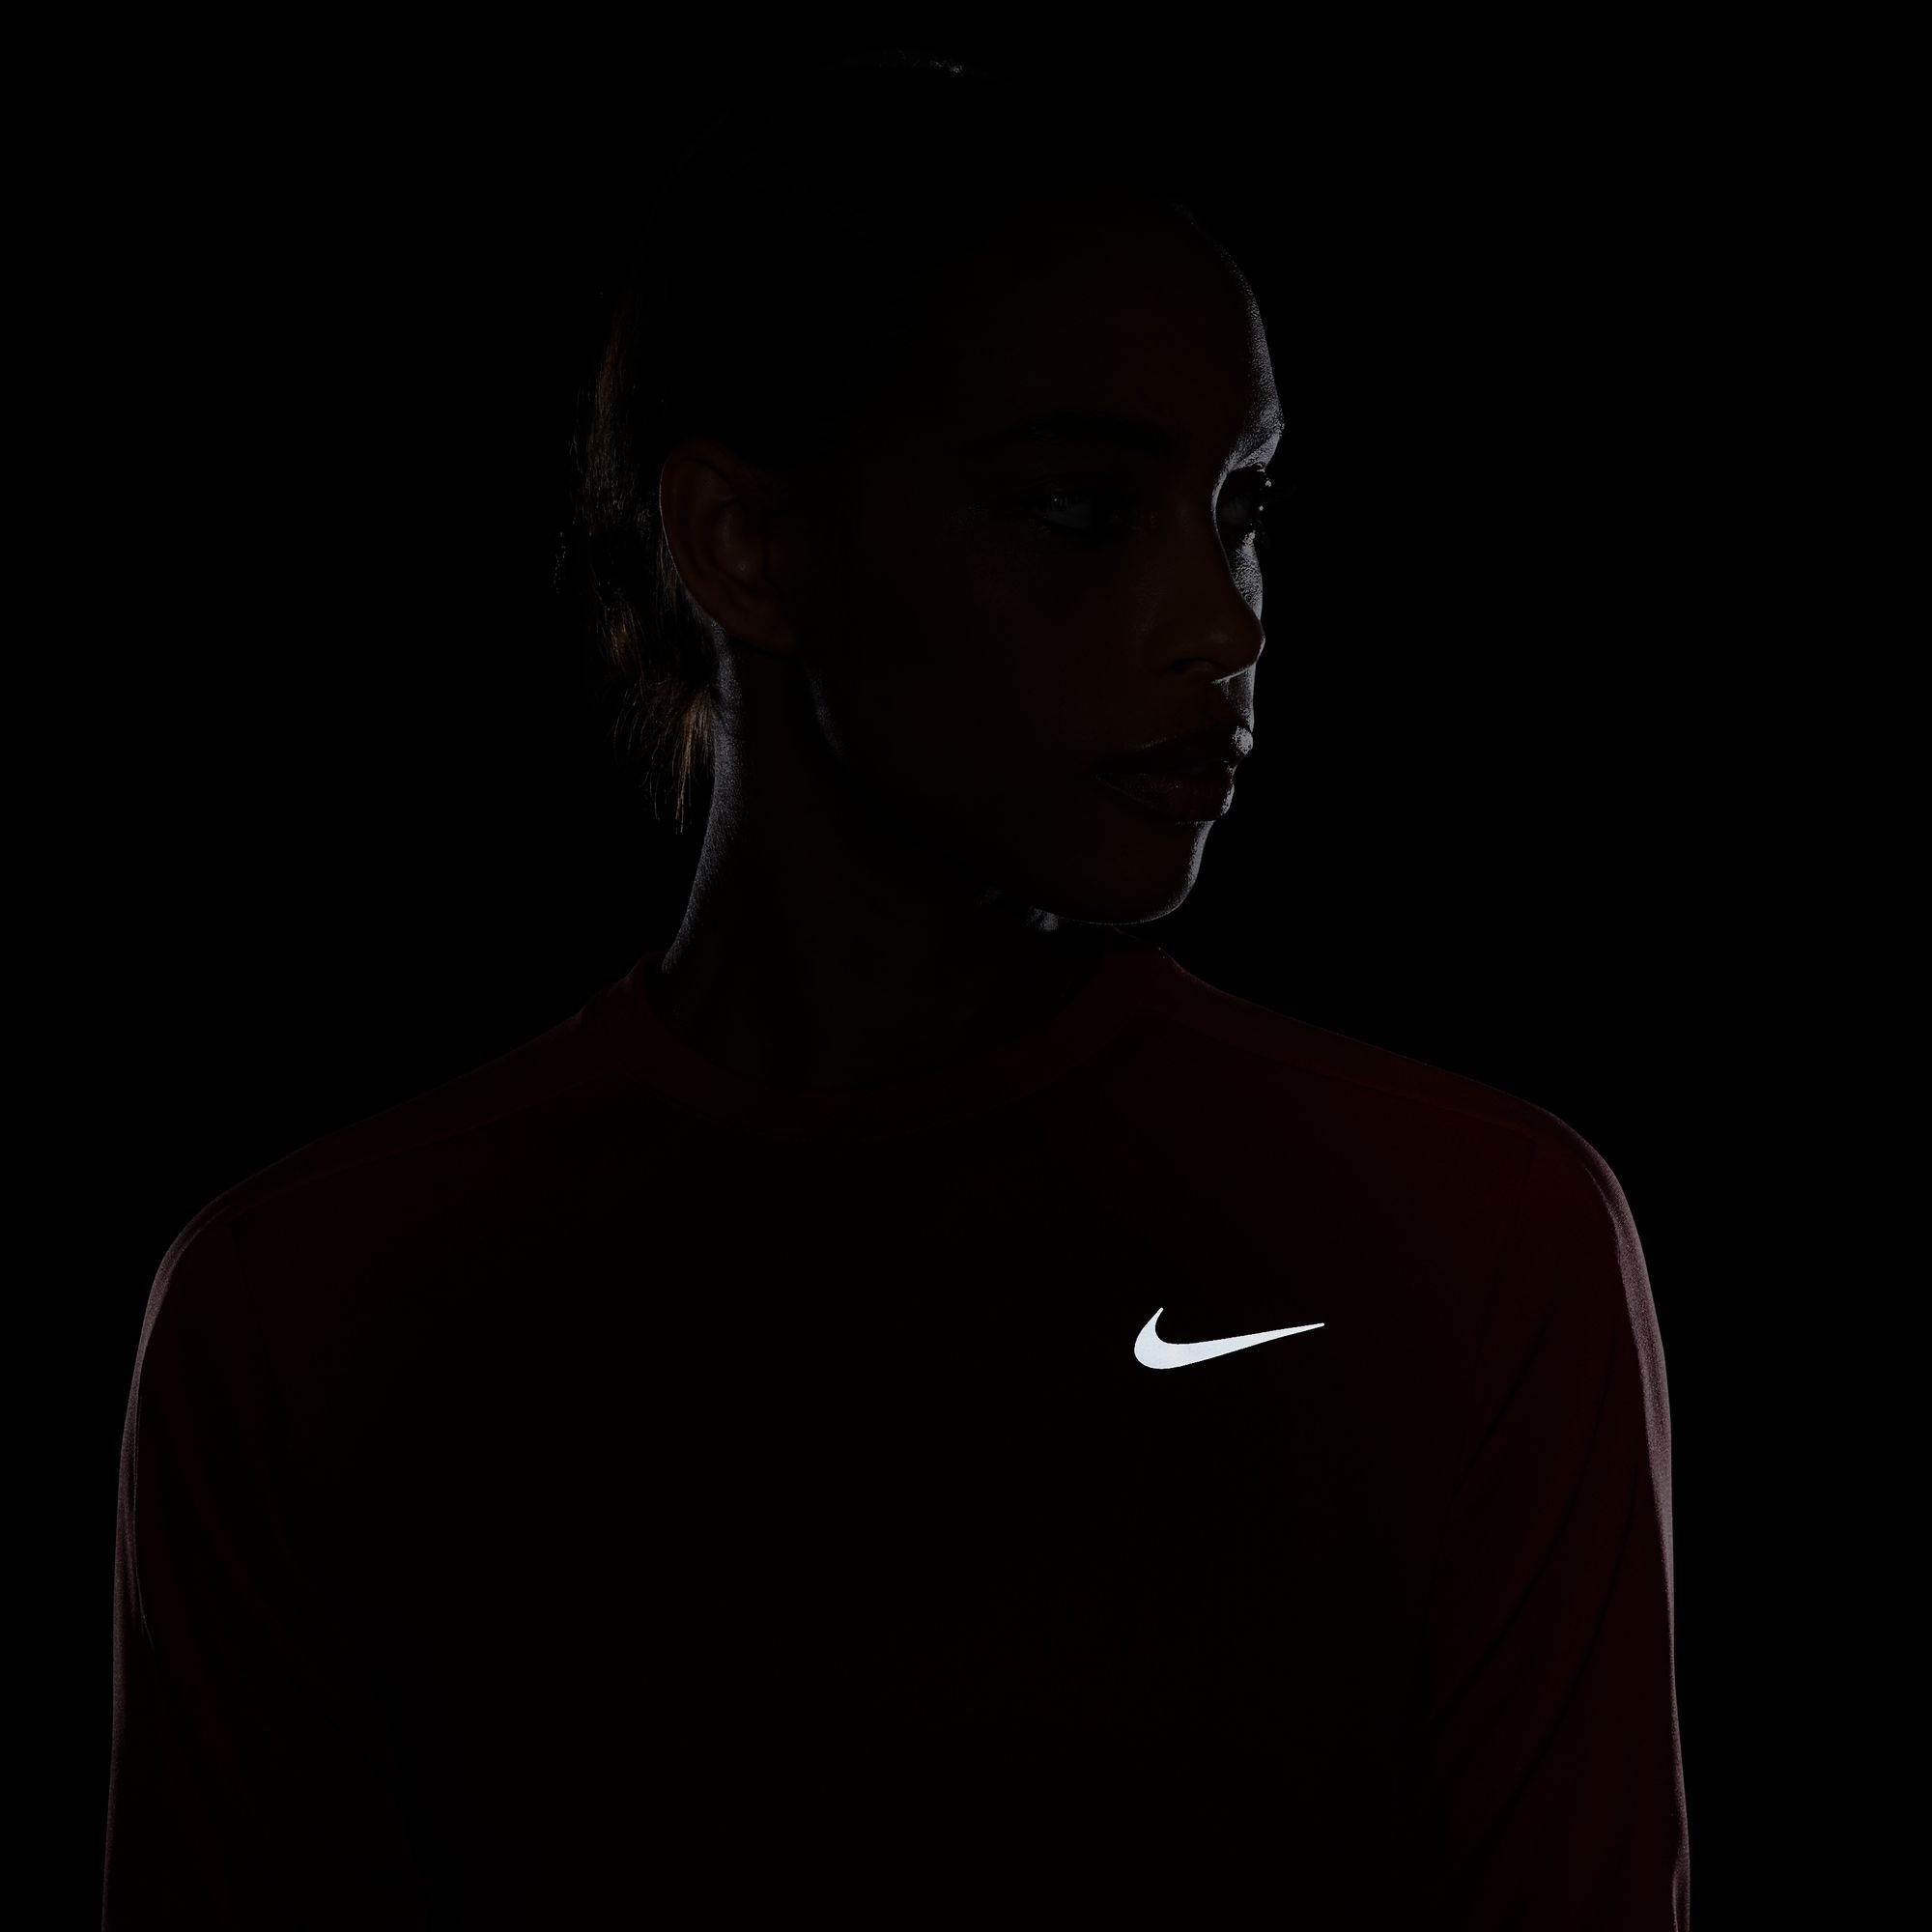 CREW-NECK Nike RUNNING Laufshirt TOP DRI-FIT WOMEN'S SILV ADOBE/REFLECTIVE